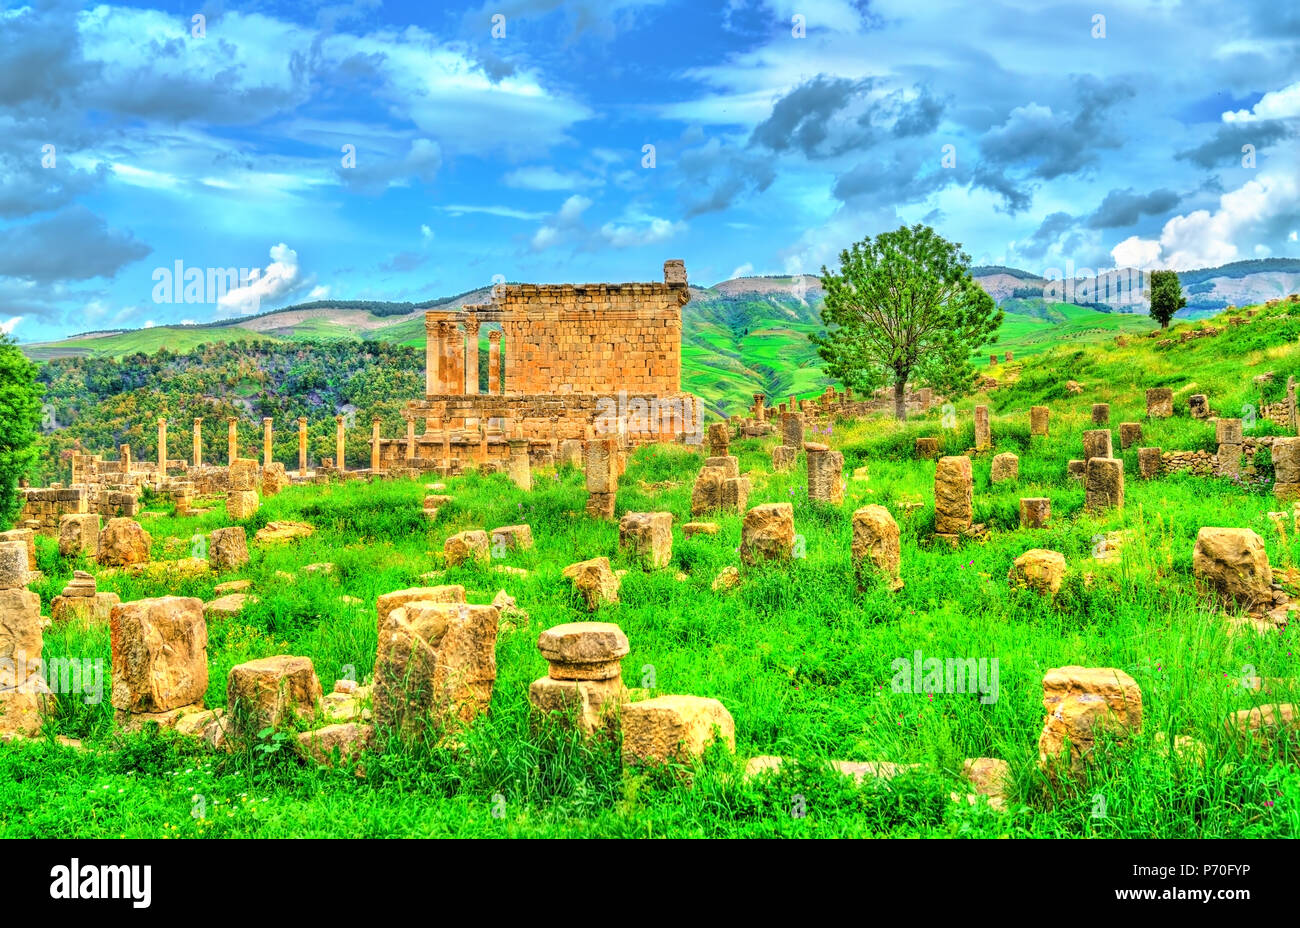 Berbero-Roman ruins at Djemila in Algeria Stock Photo